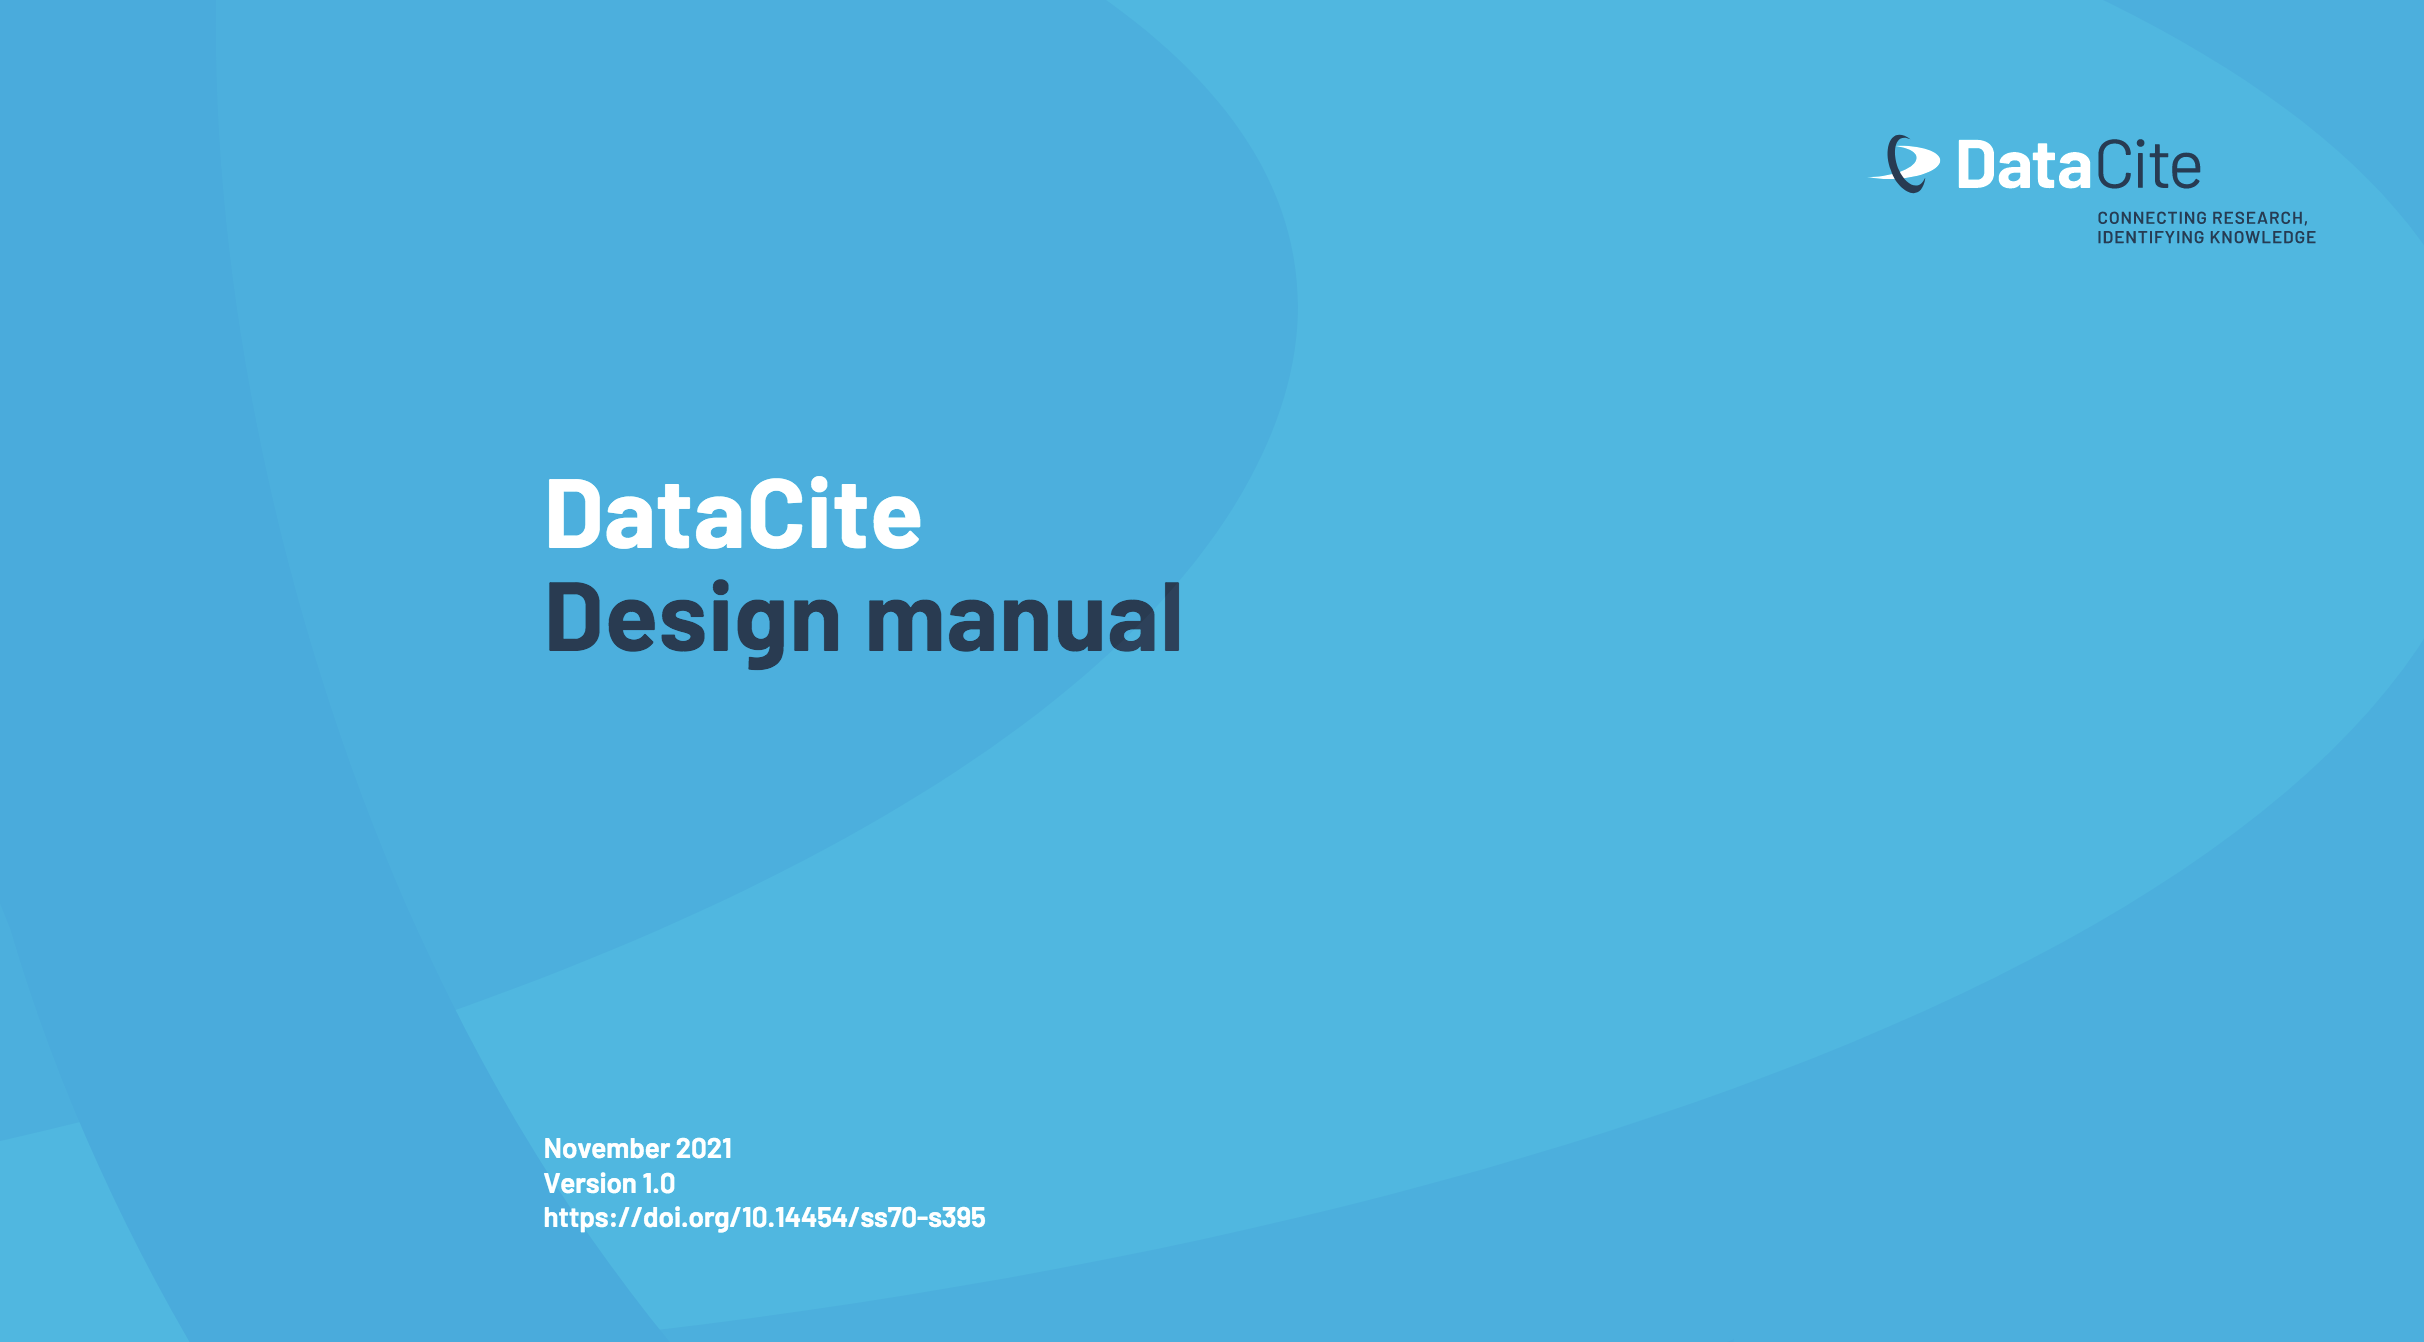 [DataCite Design Manual](https://datacite.org/assets/DataCite_Design_manual-version_1_0.pdf)